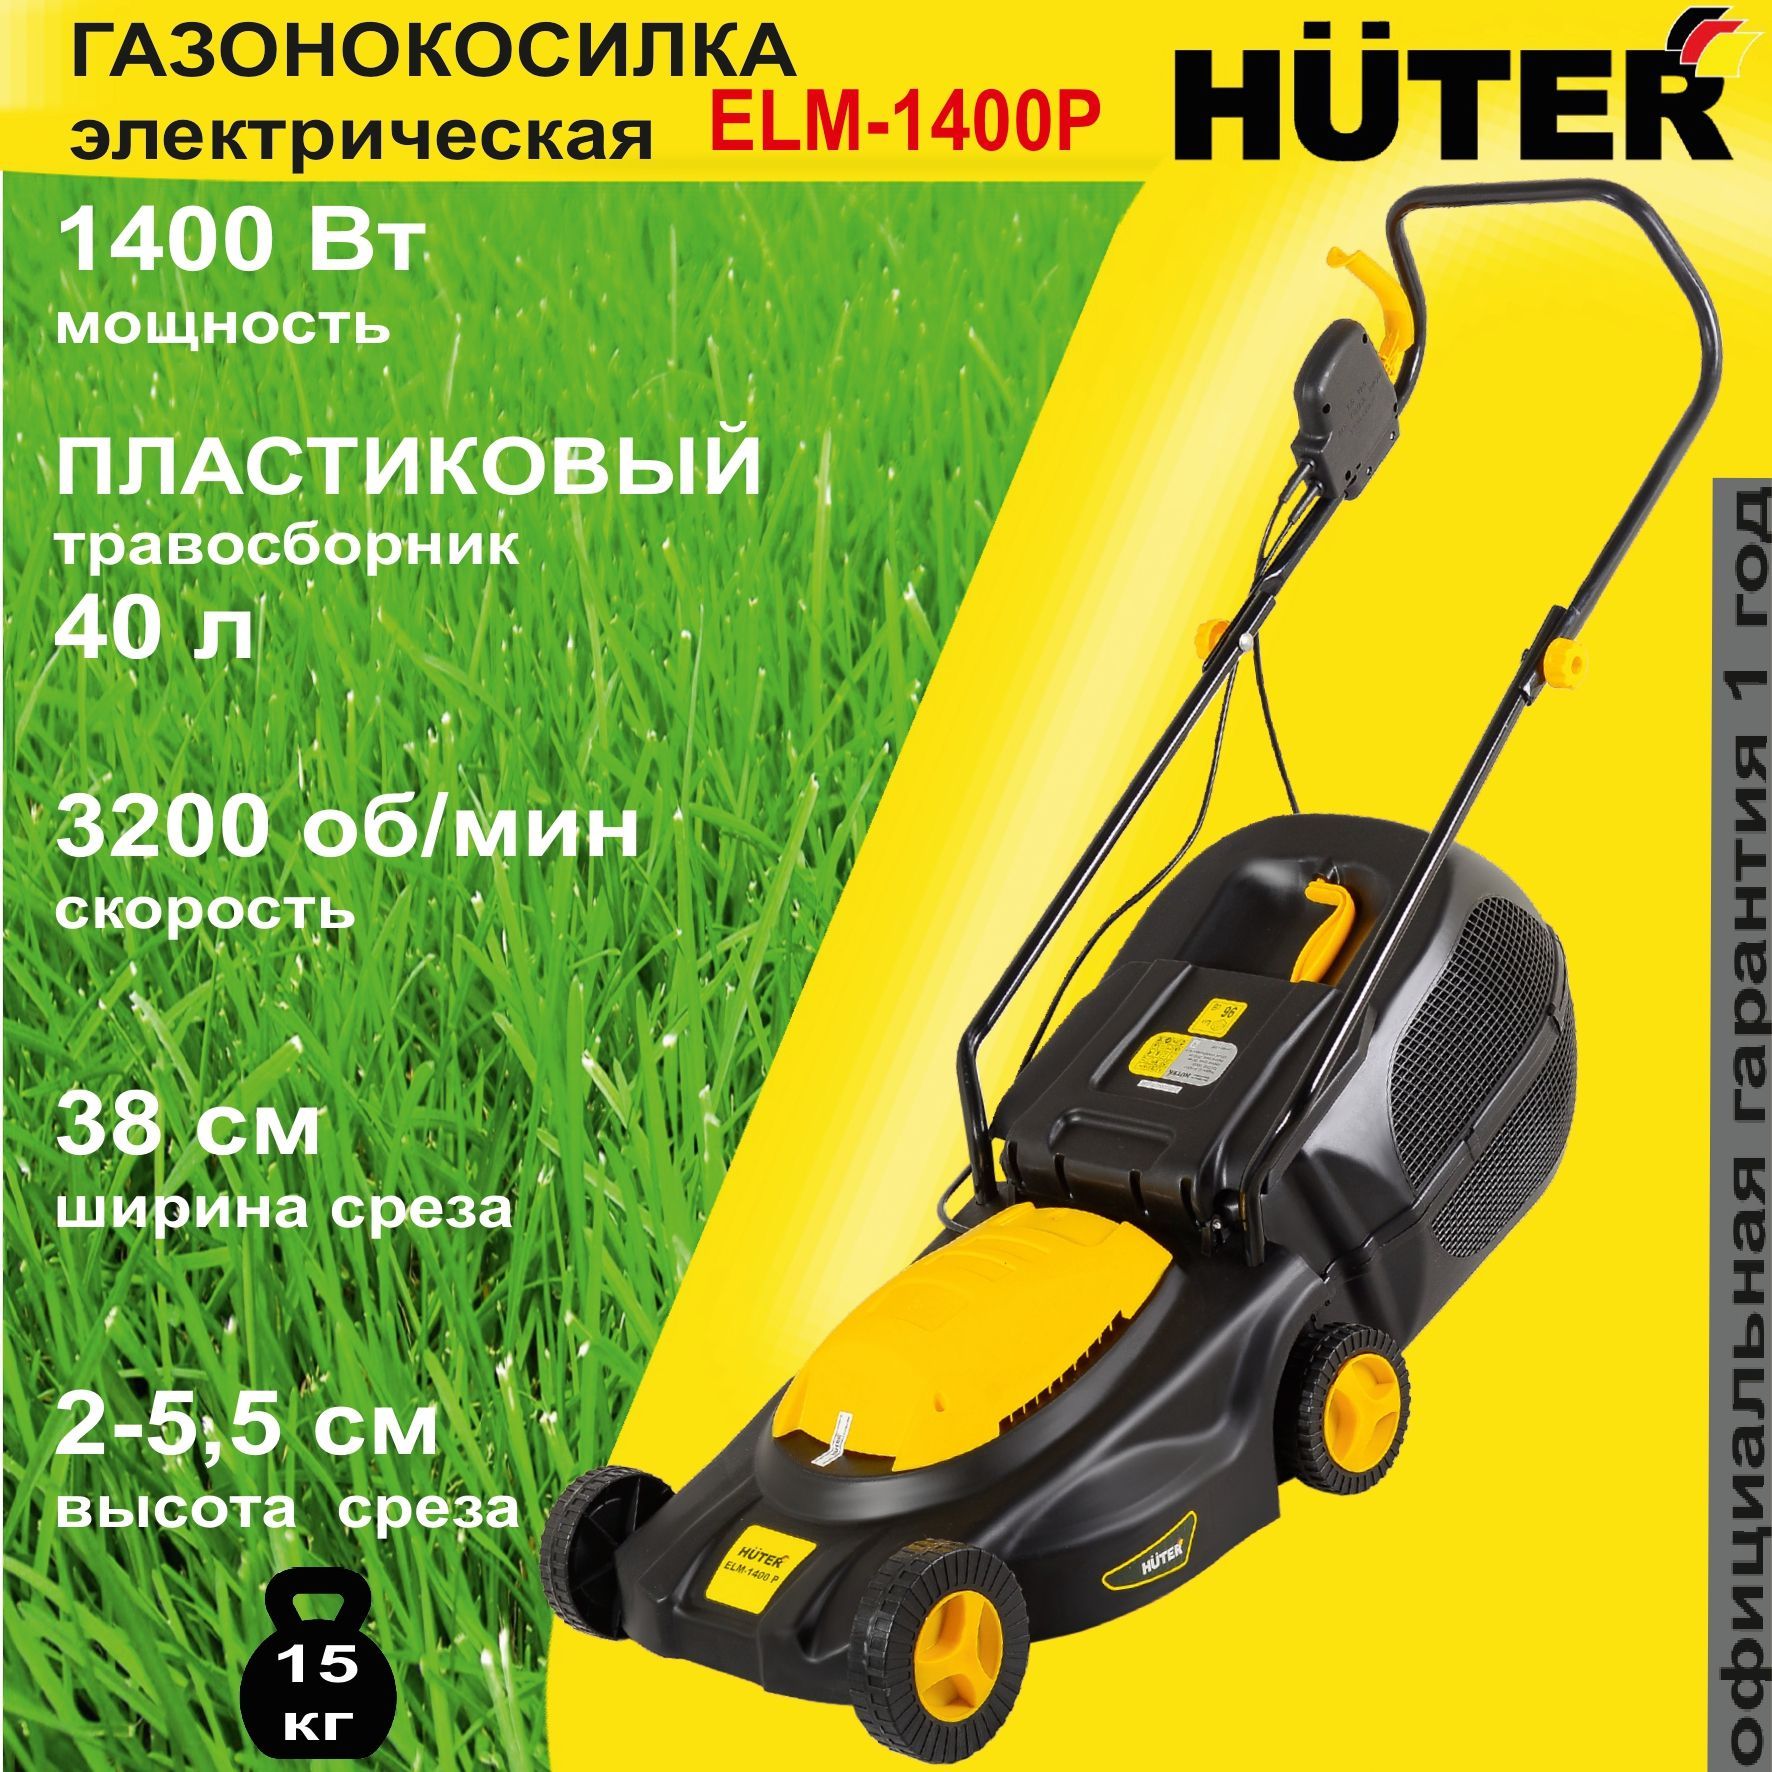 Huter 1400. Huter 1400 газонокосилка. Лезвие для газонокосилки Huter Elm-1400.